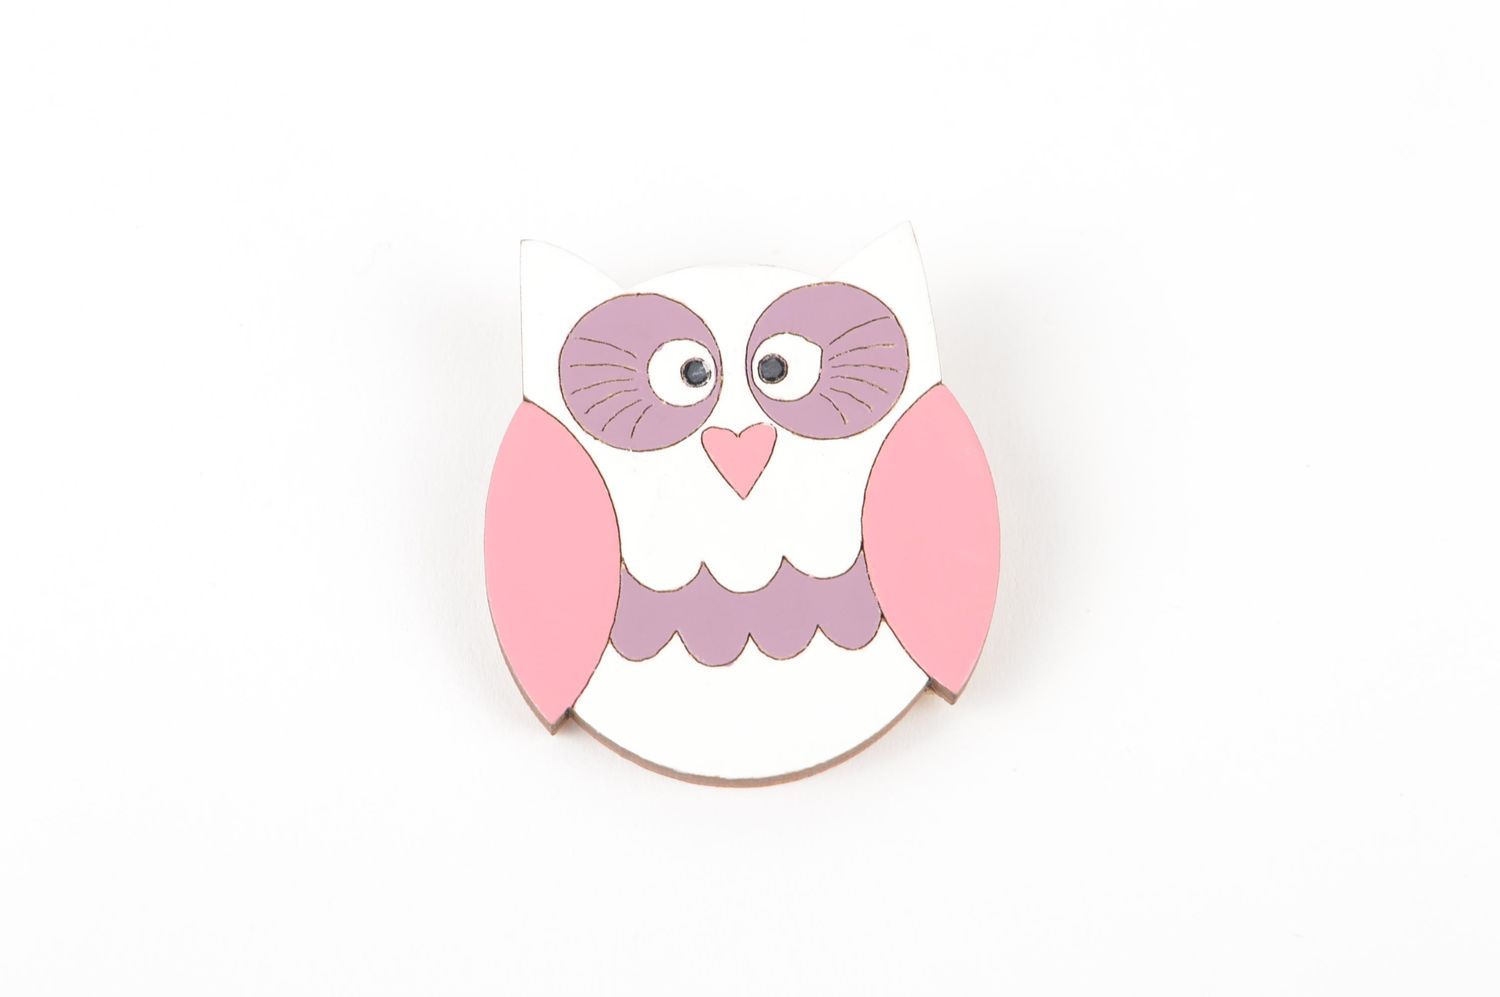 Handmade brooch made of wood cute owl brooch stylish winter jewelry gift photo 2